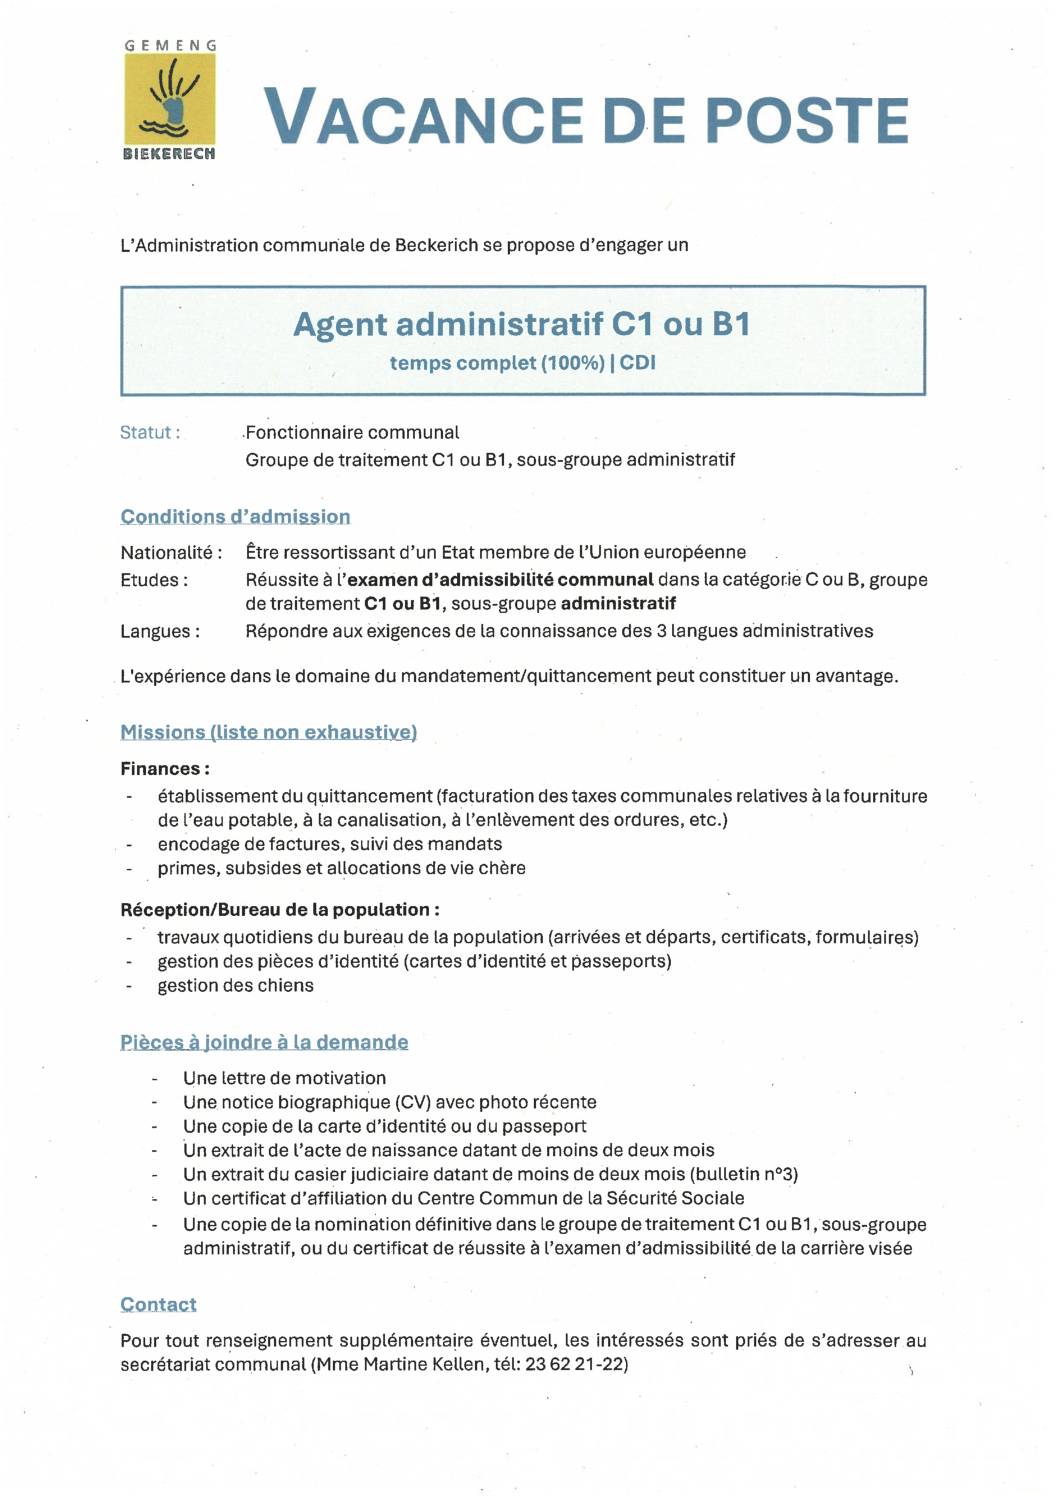 Poste vacant_Agent administratif C1 ou B1